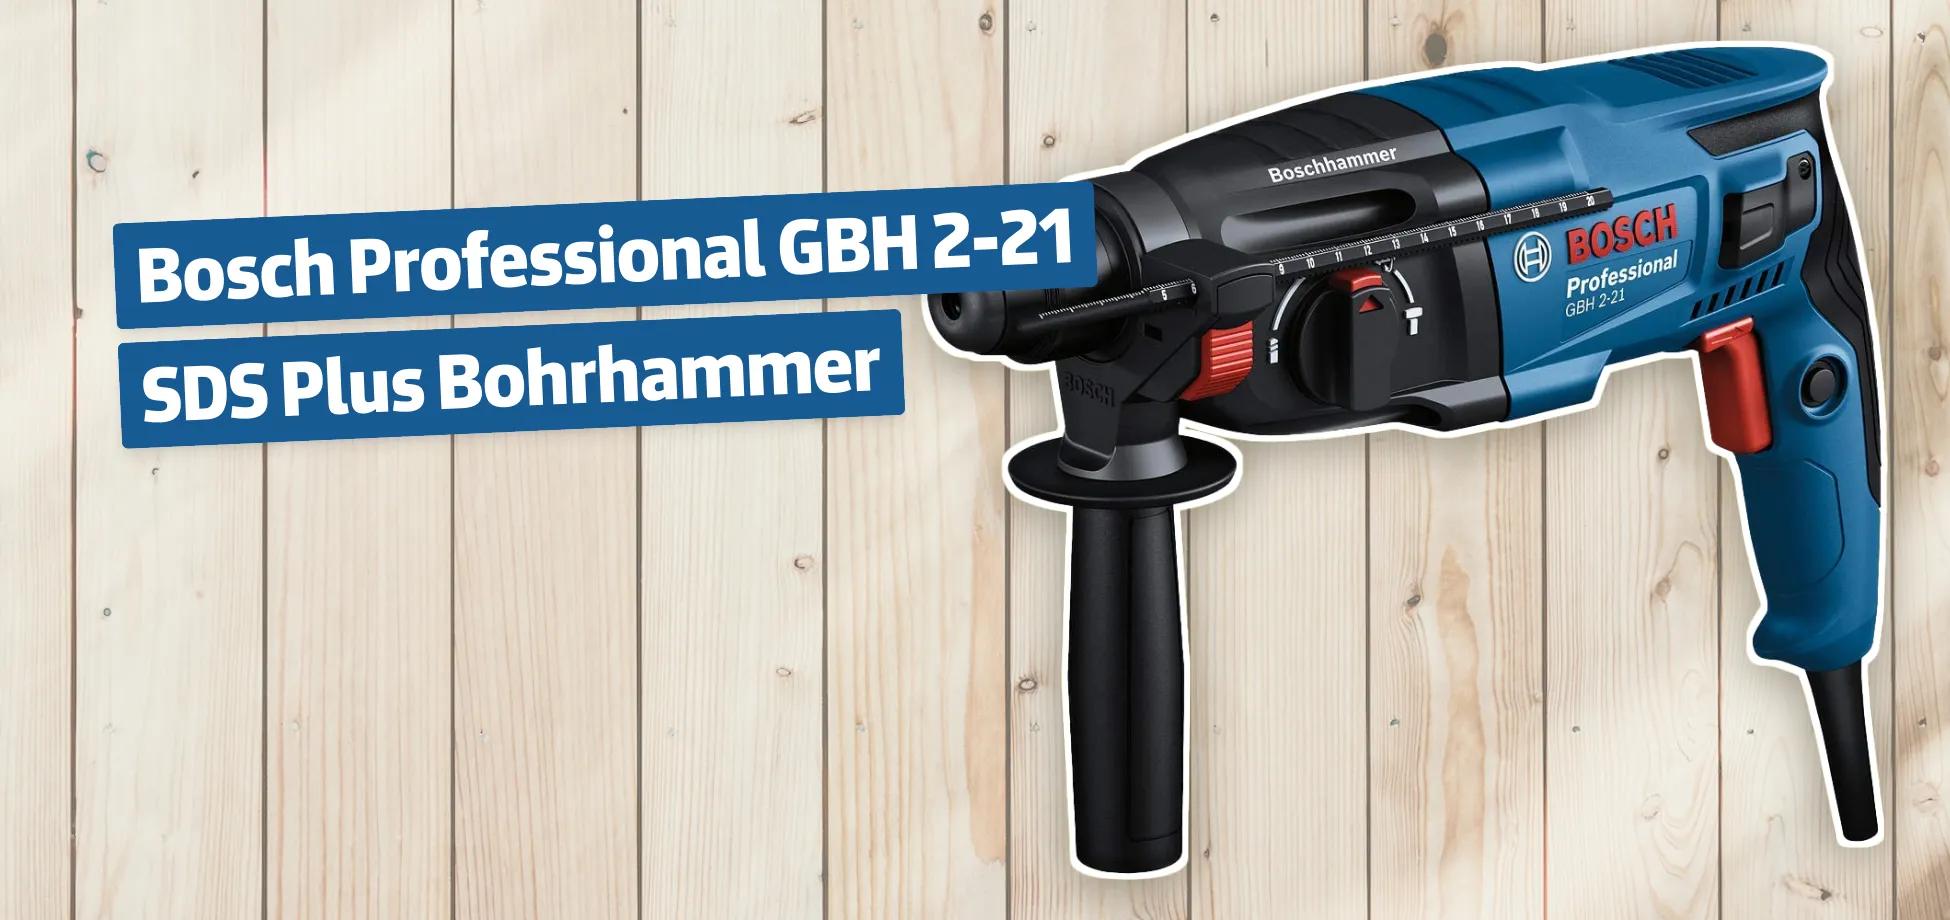 Bosch Professional GBH 2-21 SDS Plus Bohrhammer